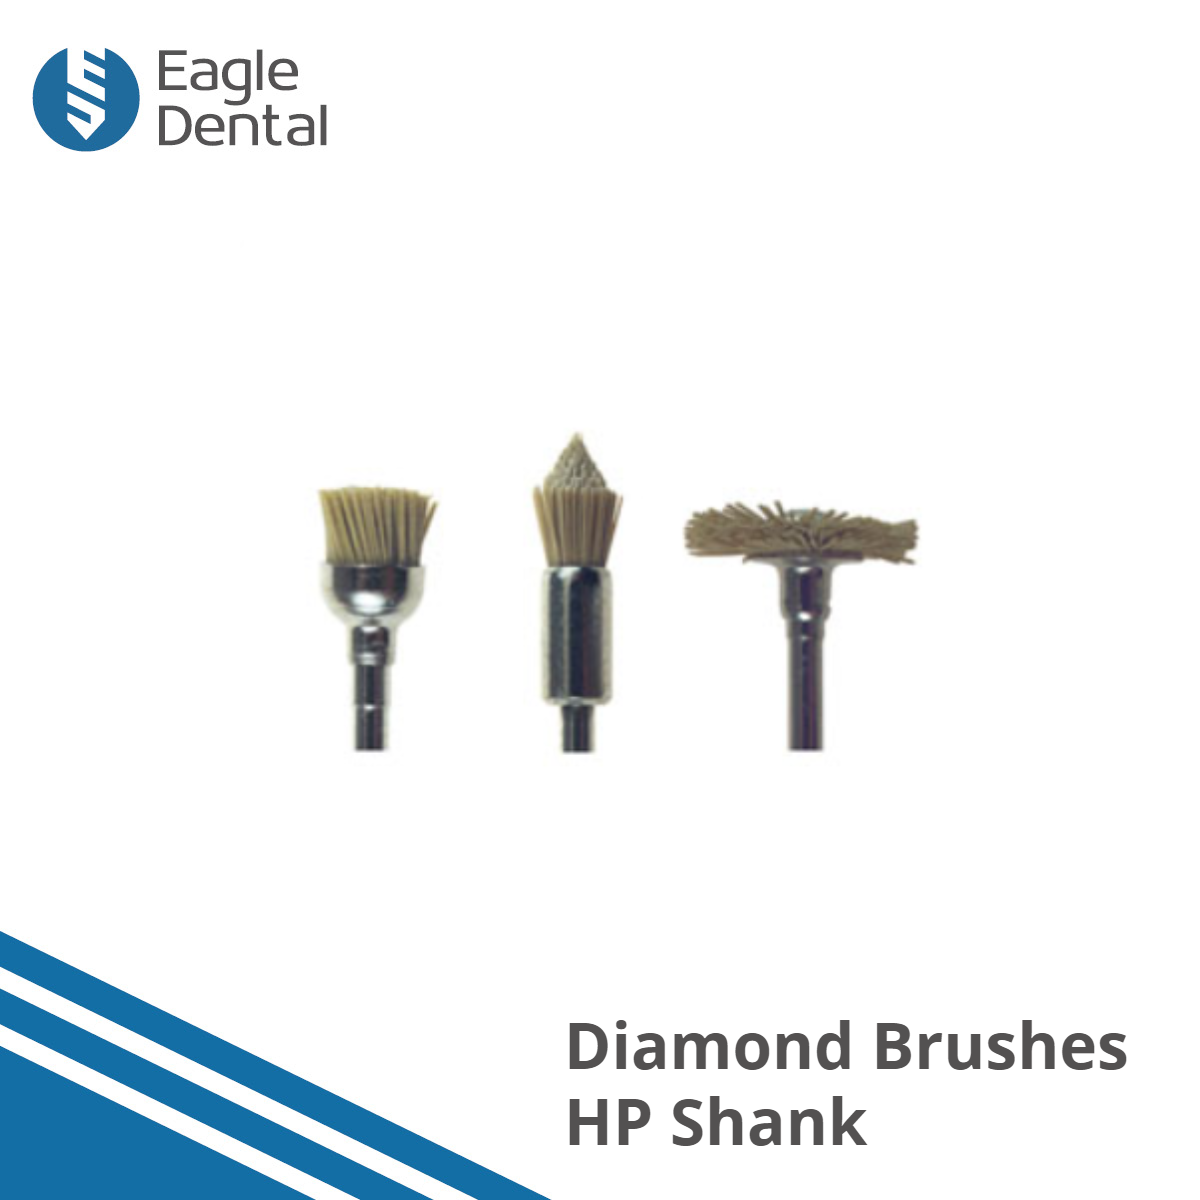 Diamond Brushes for ceramic and composites